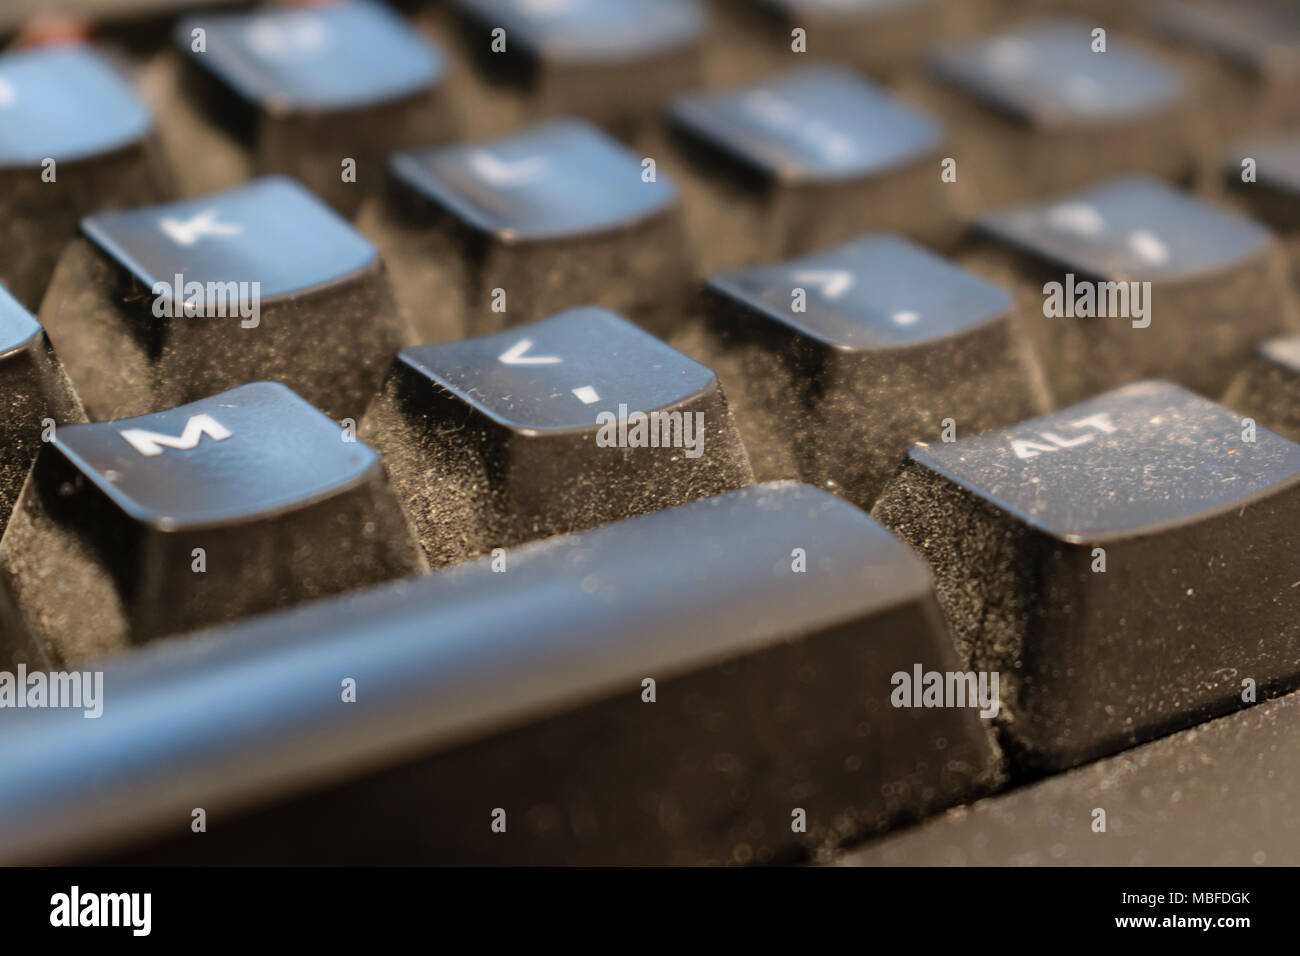 Dirty keyboard keys close up, health, hygiene hazard Stock Photo